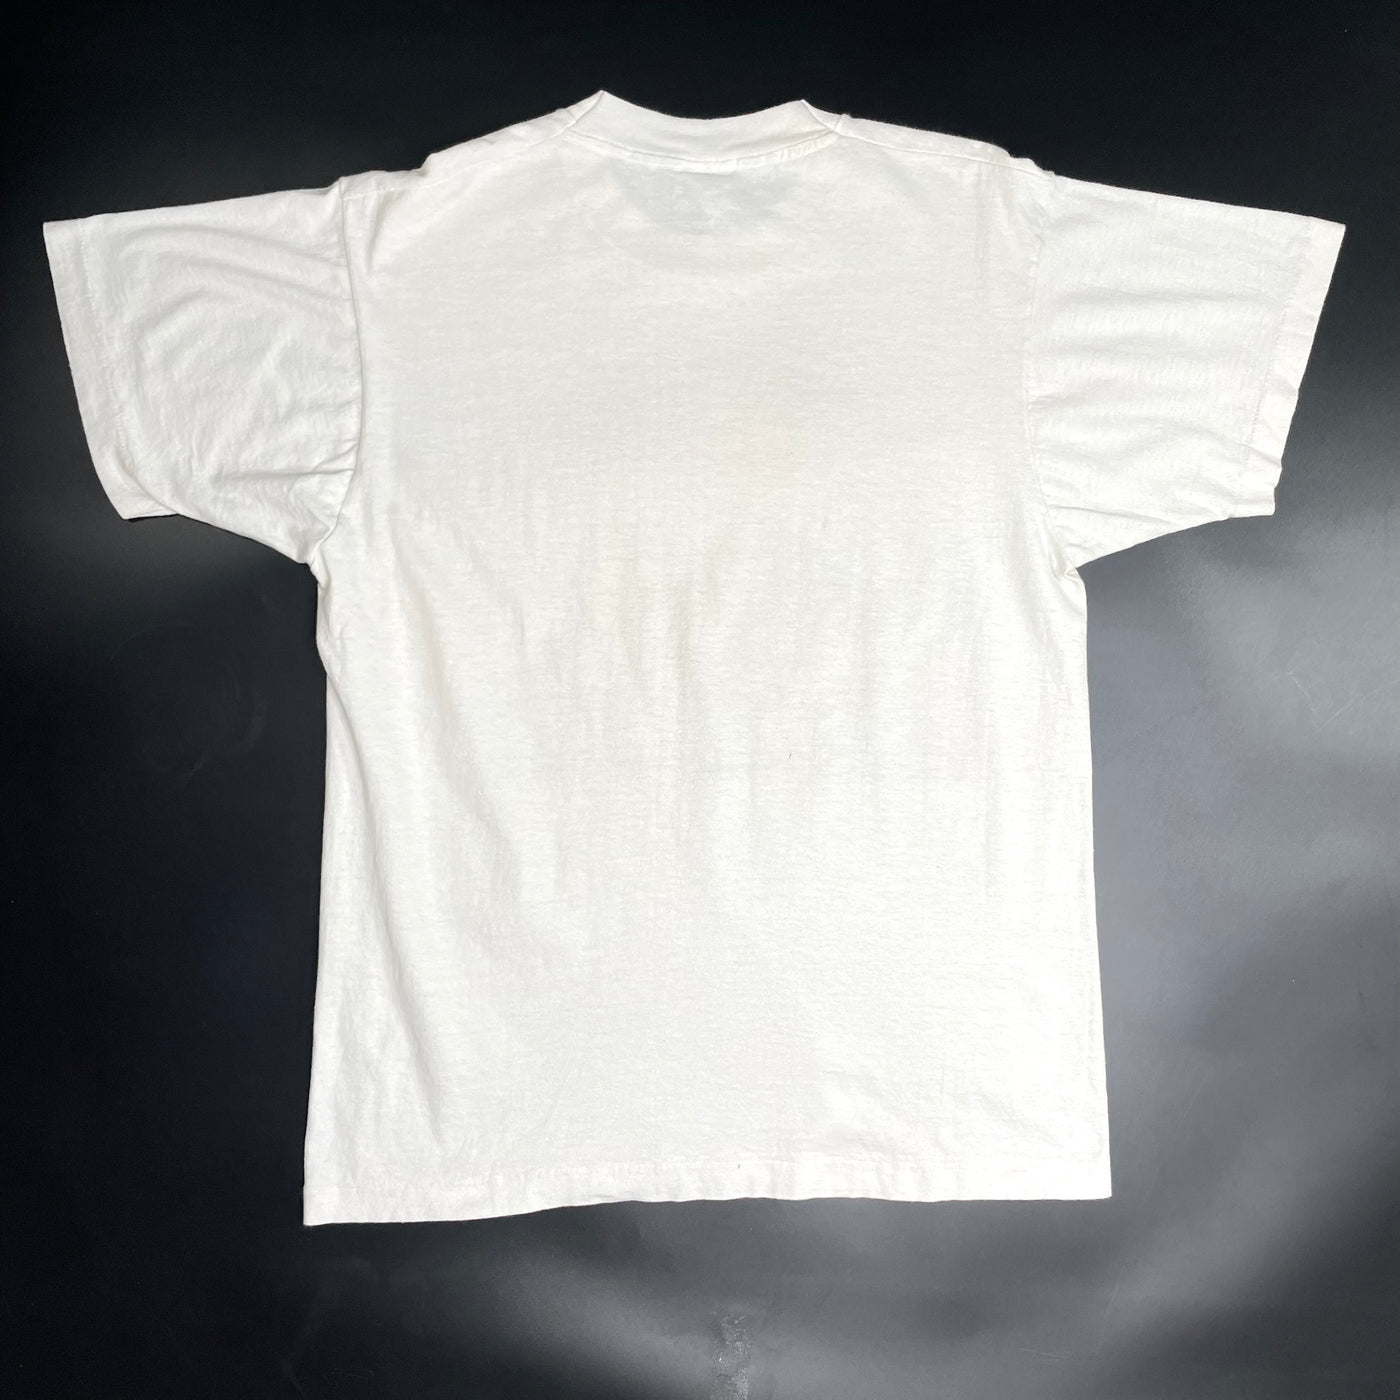 '89 "Battle Of The Bay" White Sports T-shirt sz M